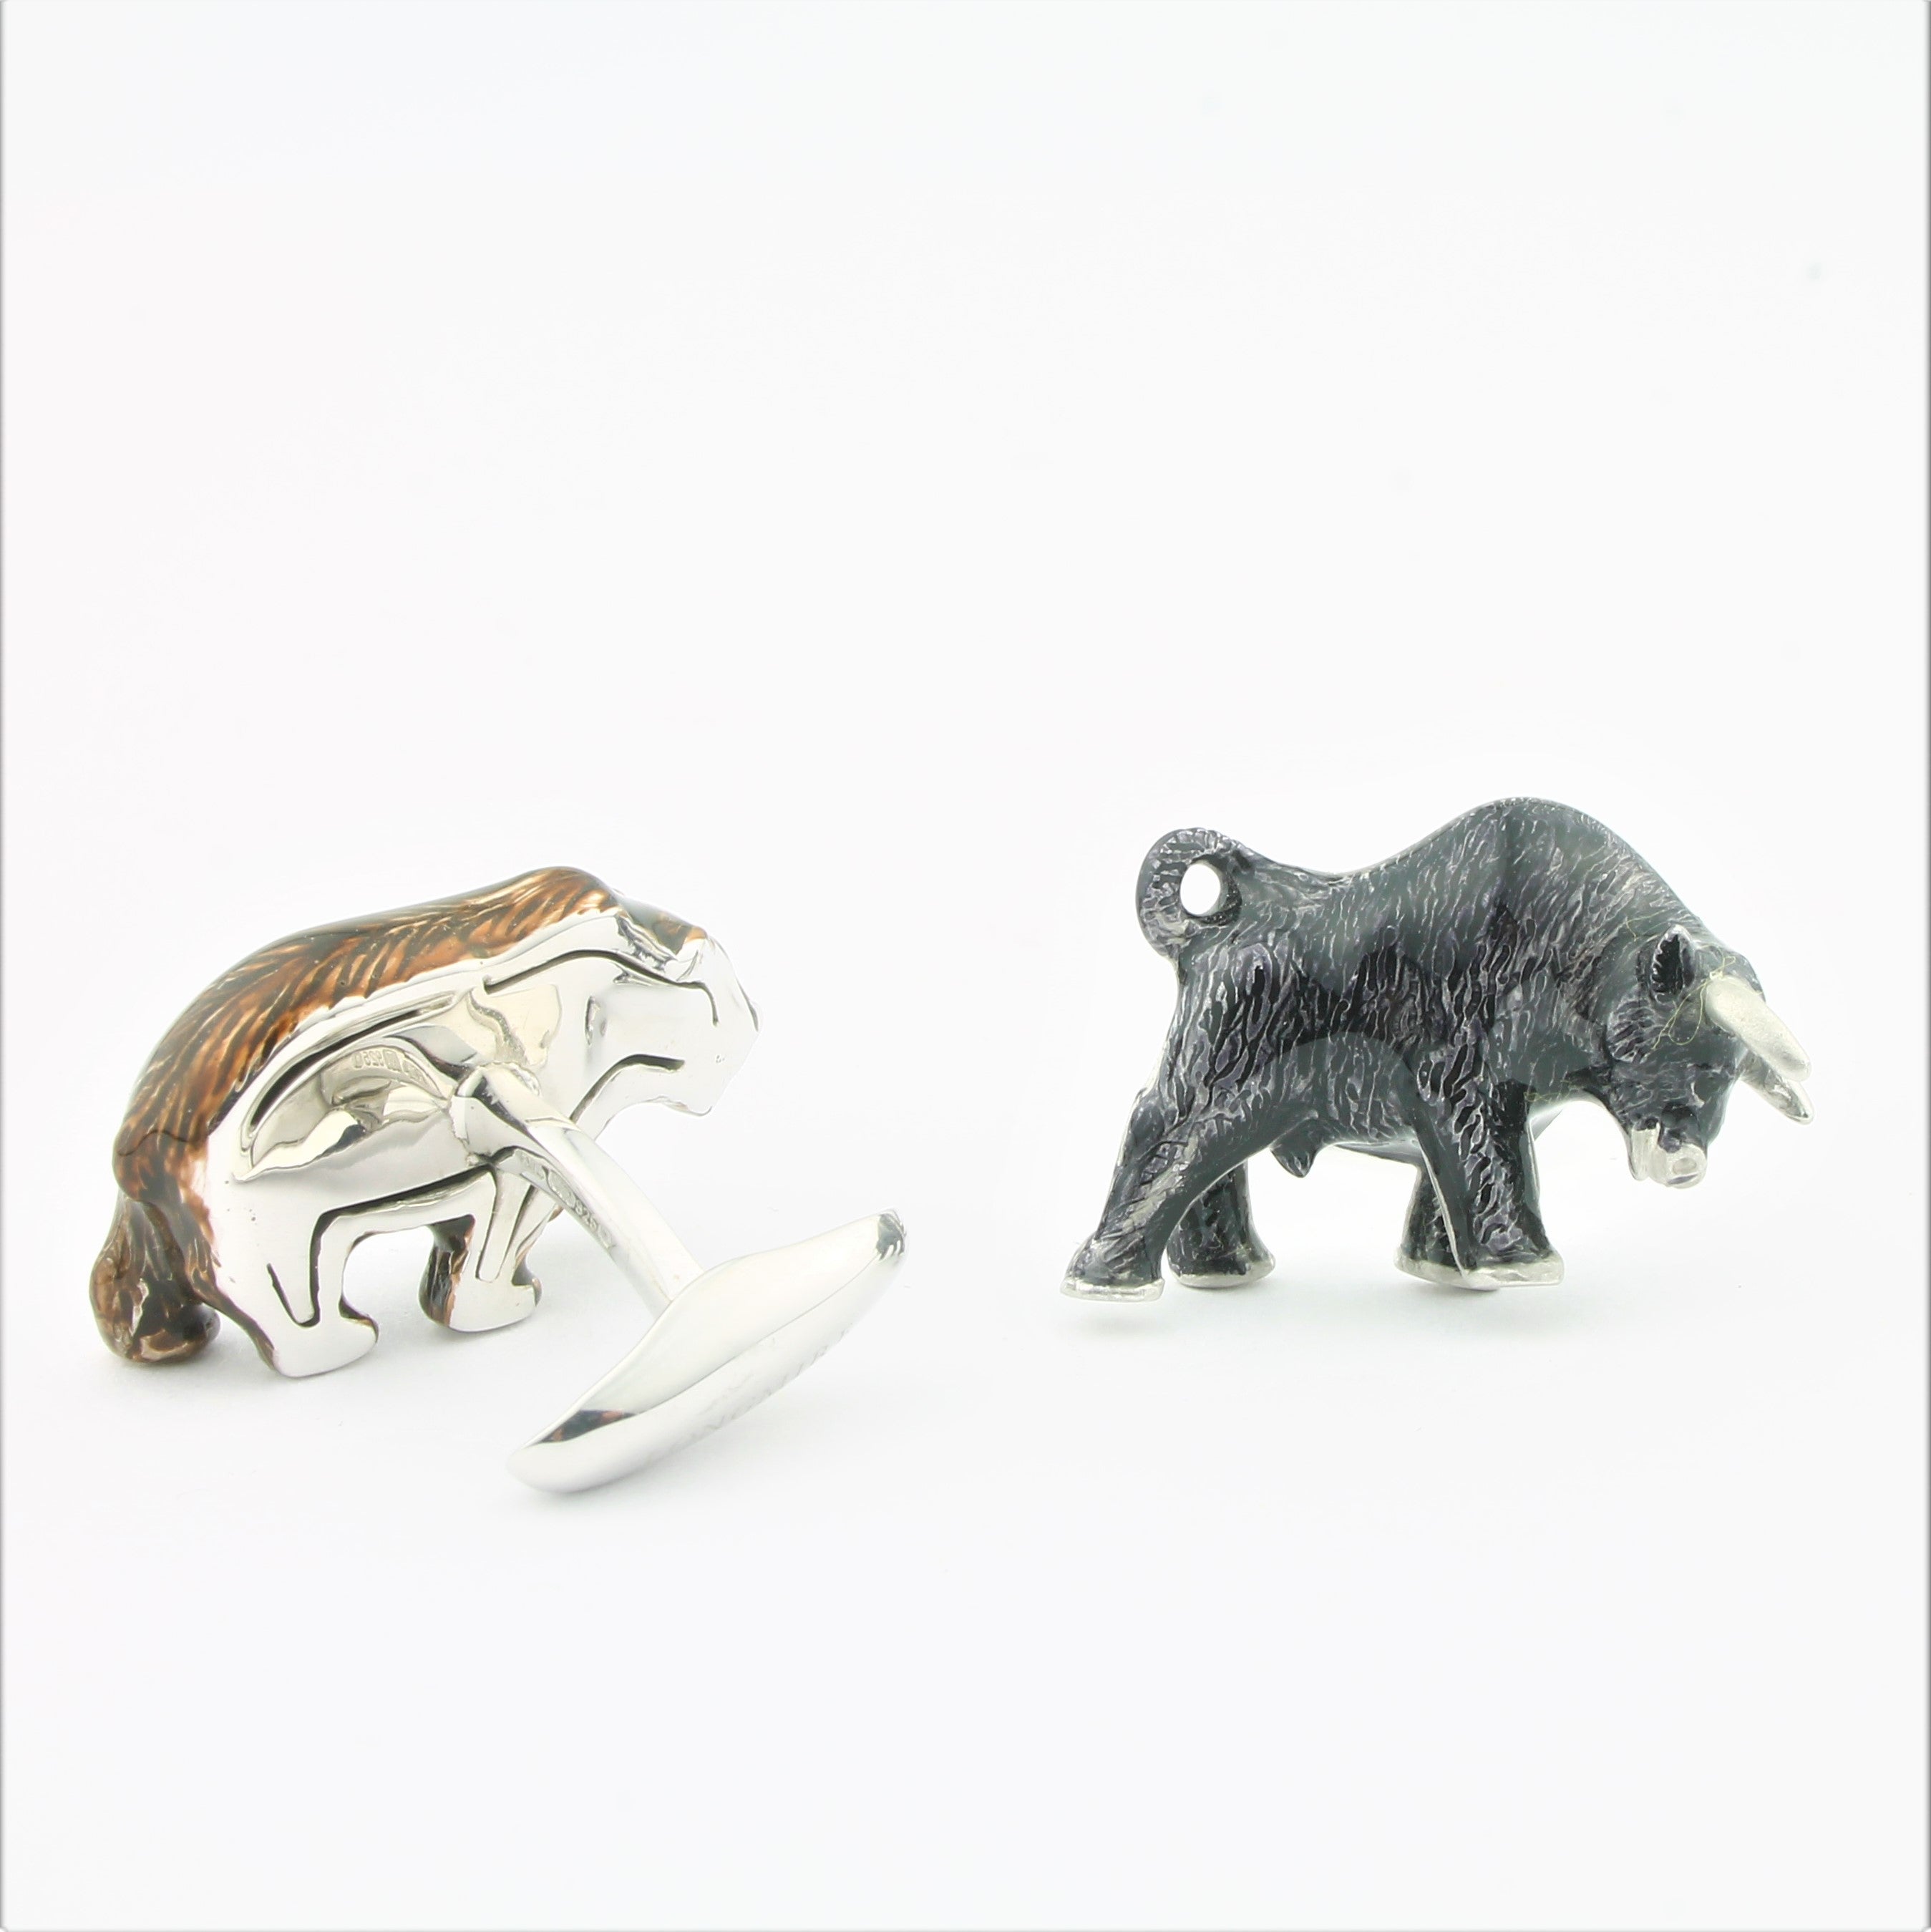 Bull and bear cufflinks in silver 